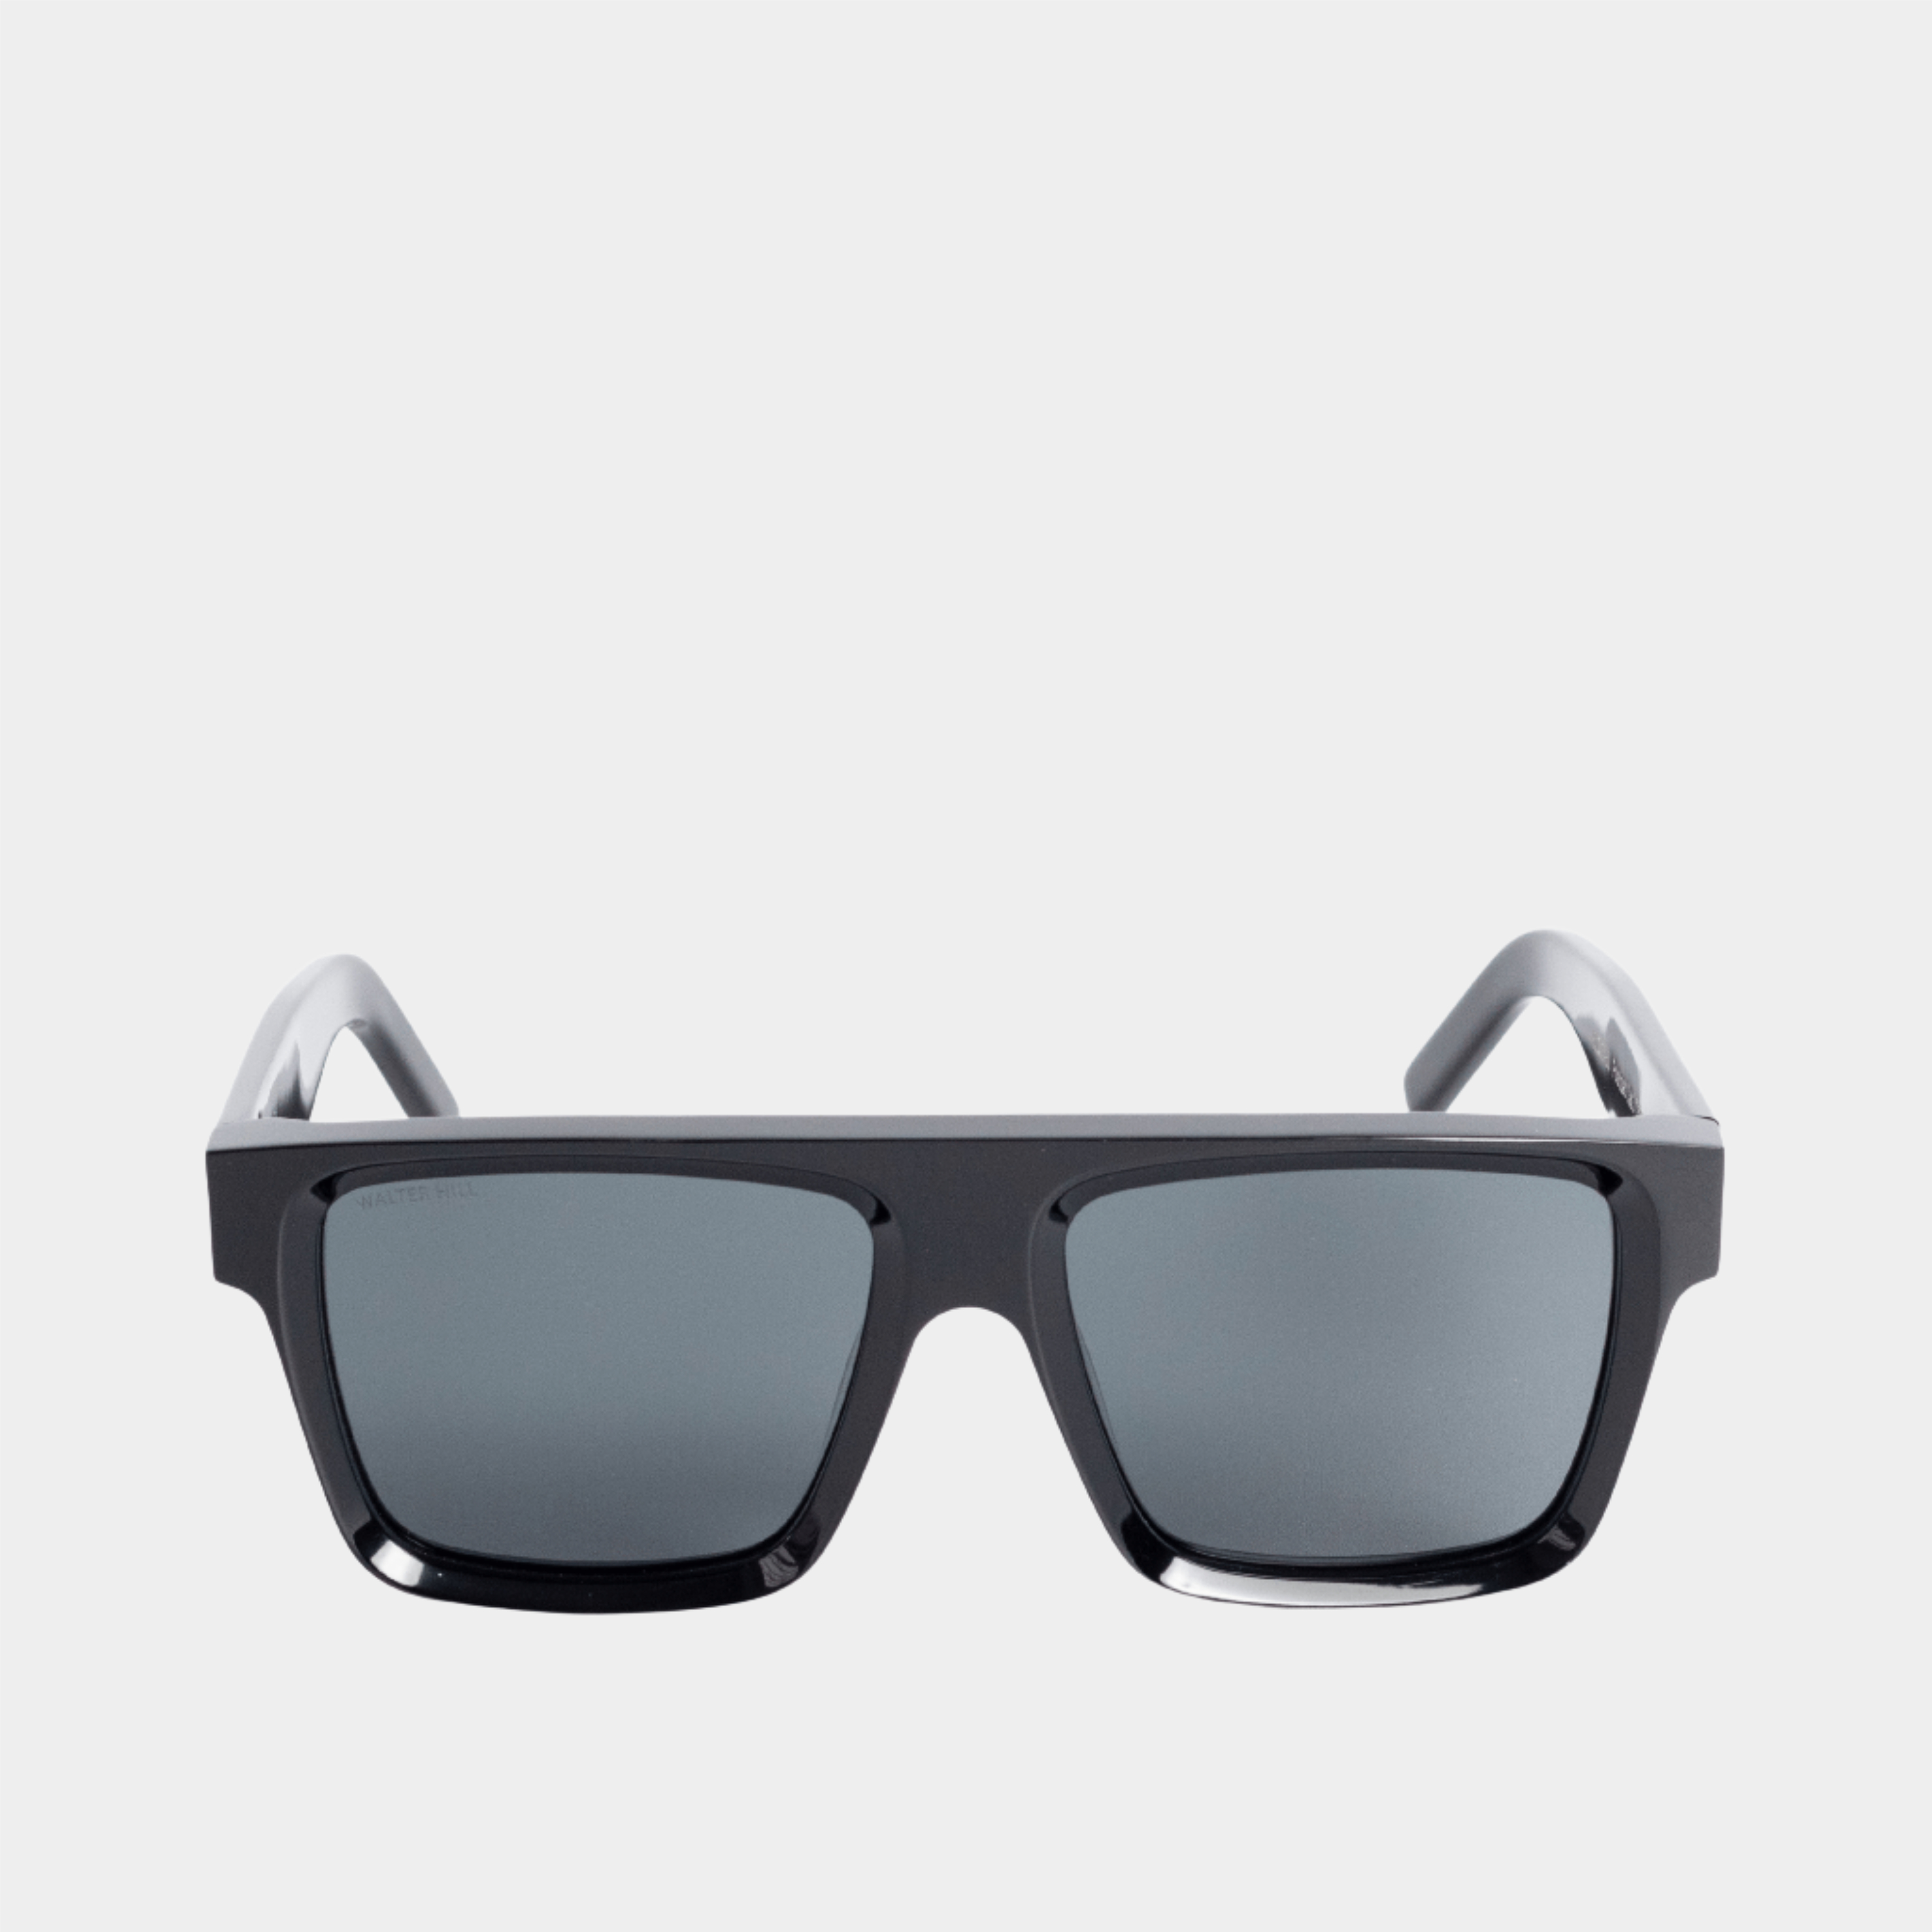 Walter Hill Sunglasses Oversized BANKS - Black